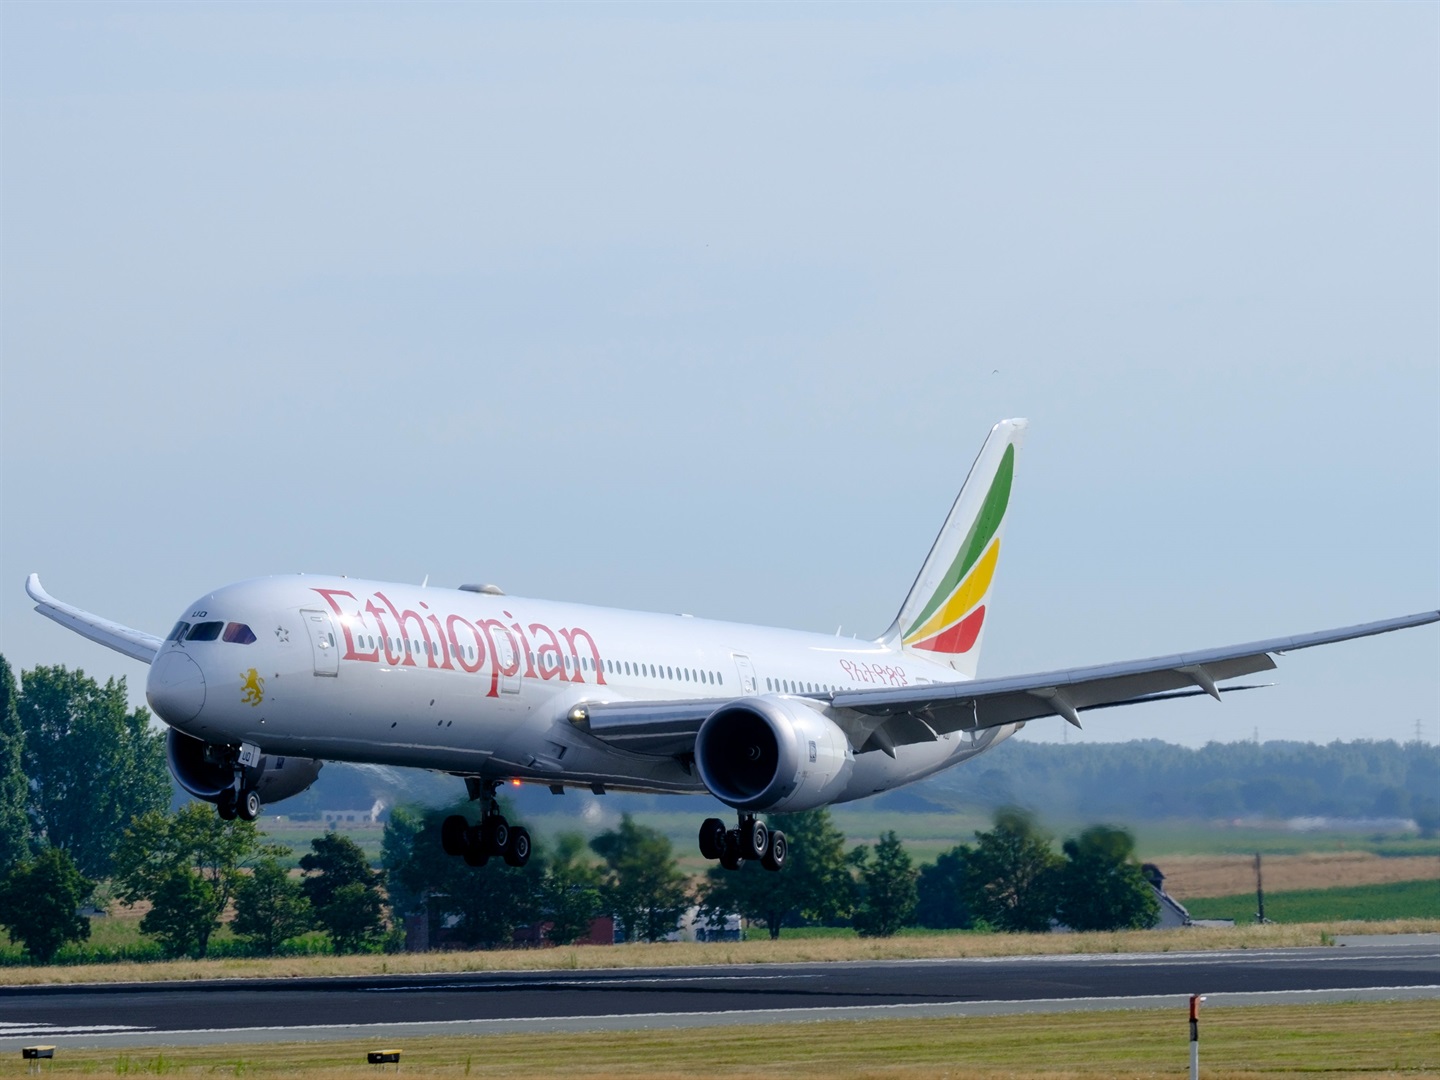 Эфиопиан Эйрлайнс. Эфиопия Аирлинес. Boeing 787-800 Dreamliner Ethiopian. Ethiopian Airlines Flight 409. Ethiopian airlines отзывы